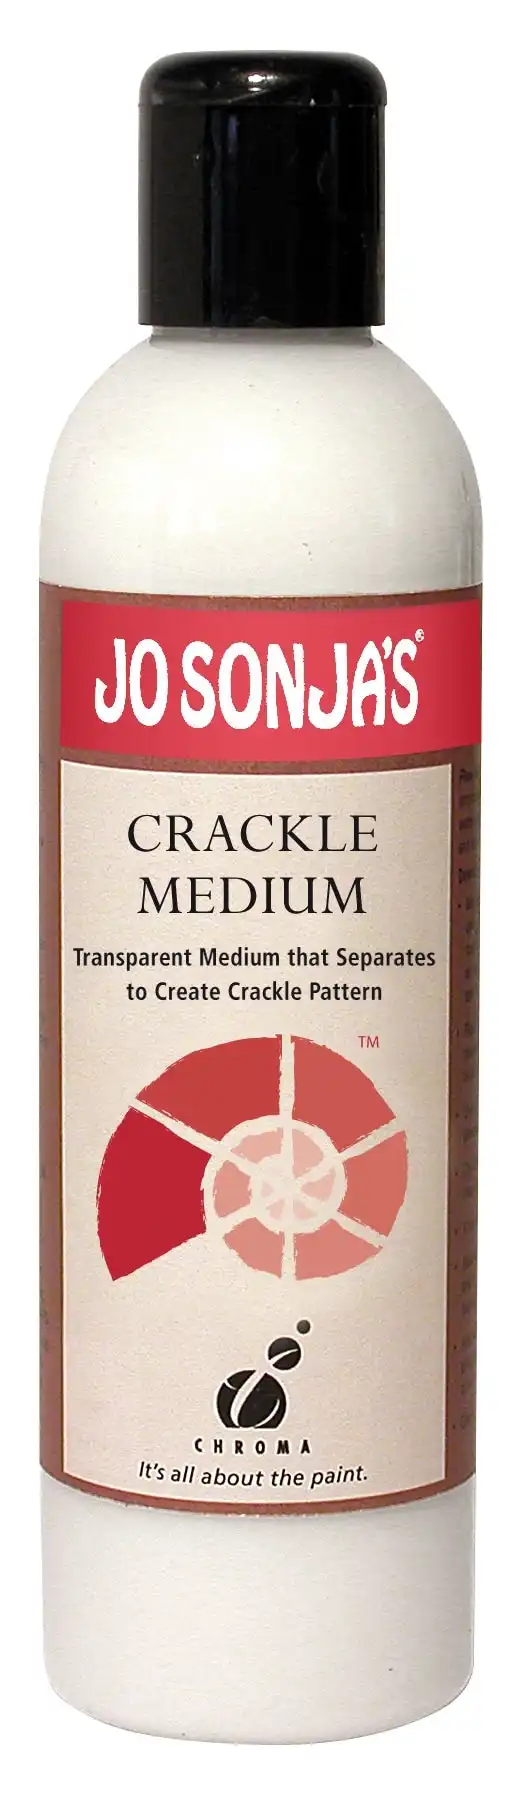 Jo Sonja's Crackle Medium